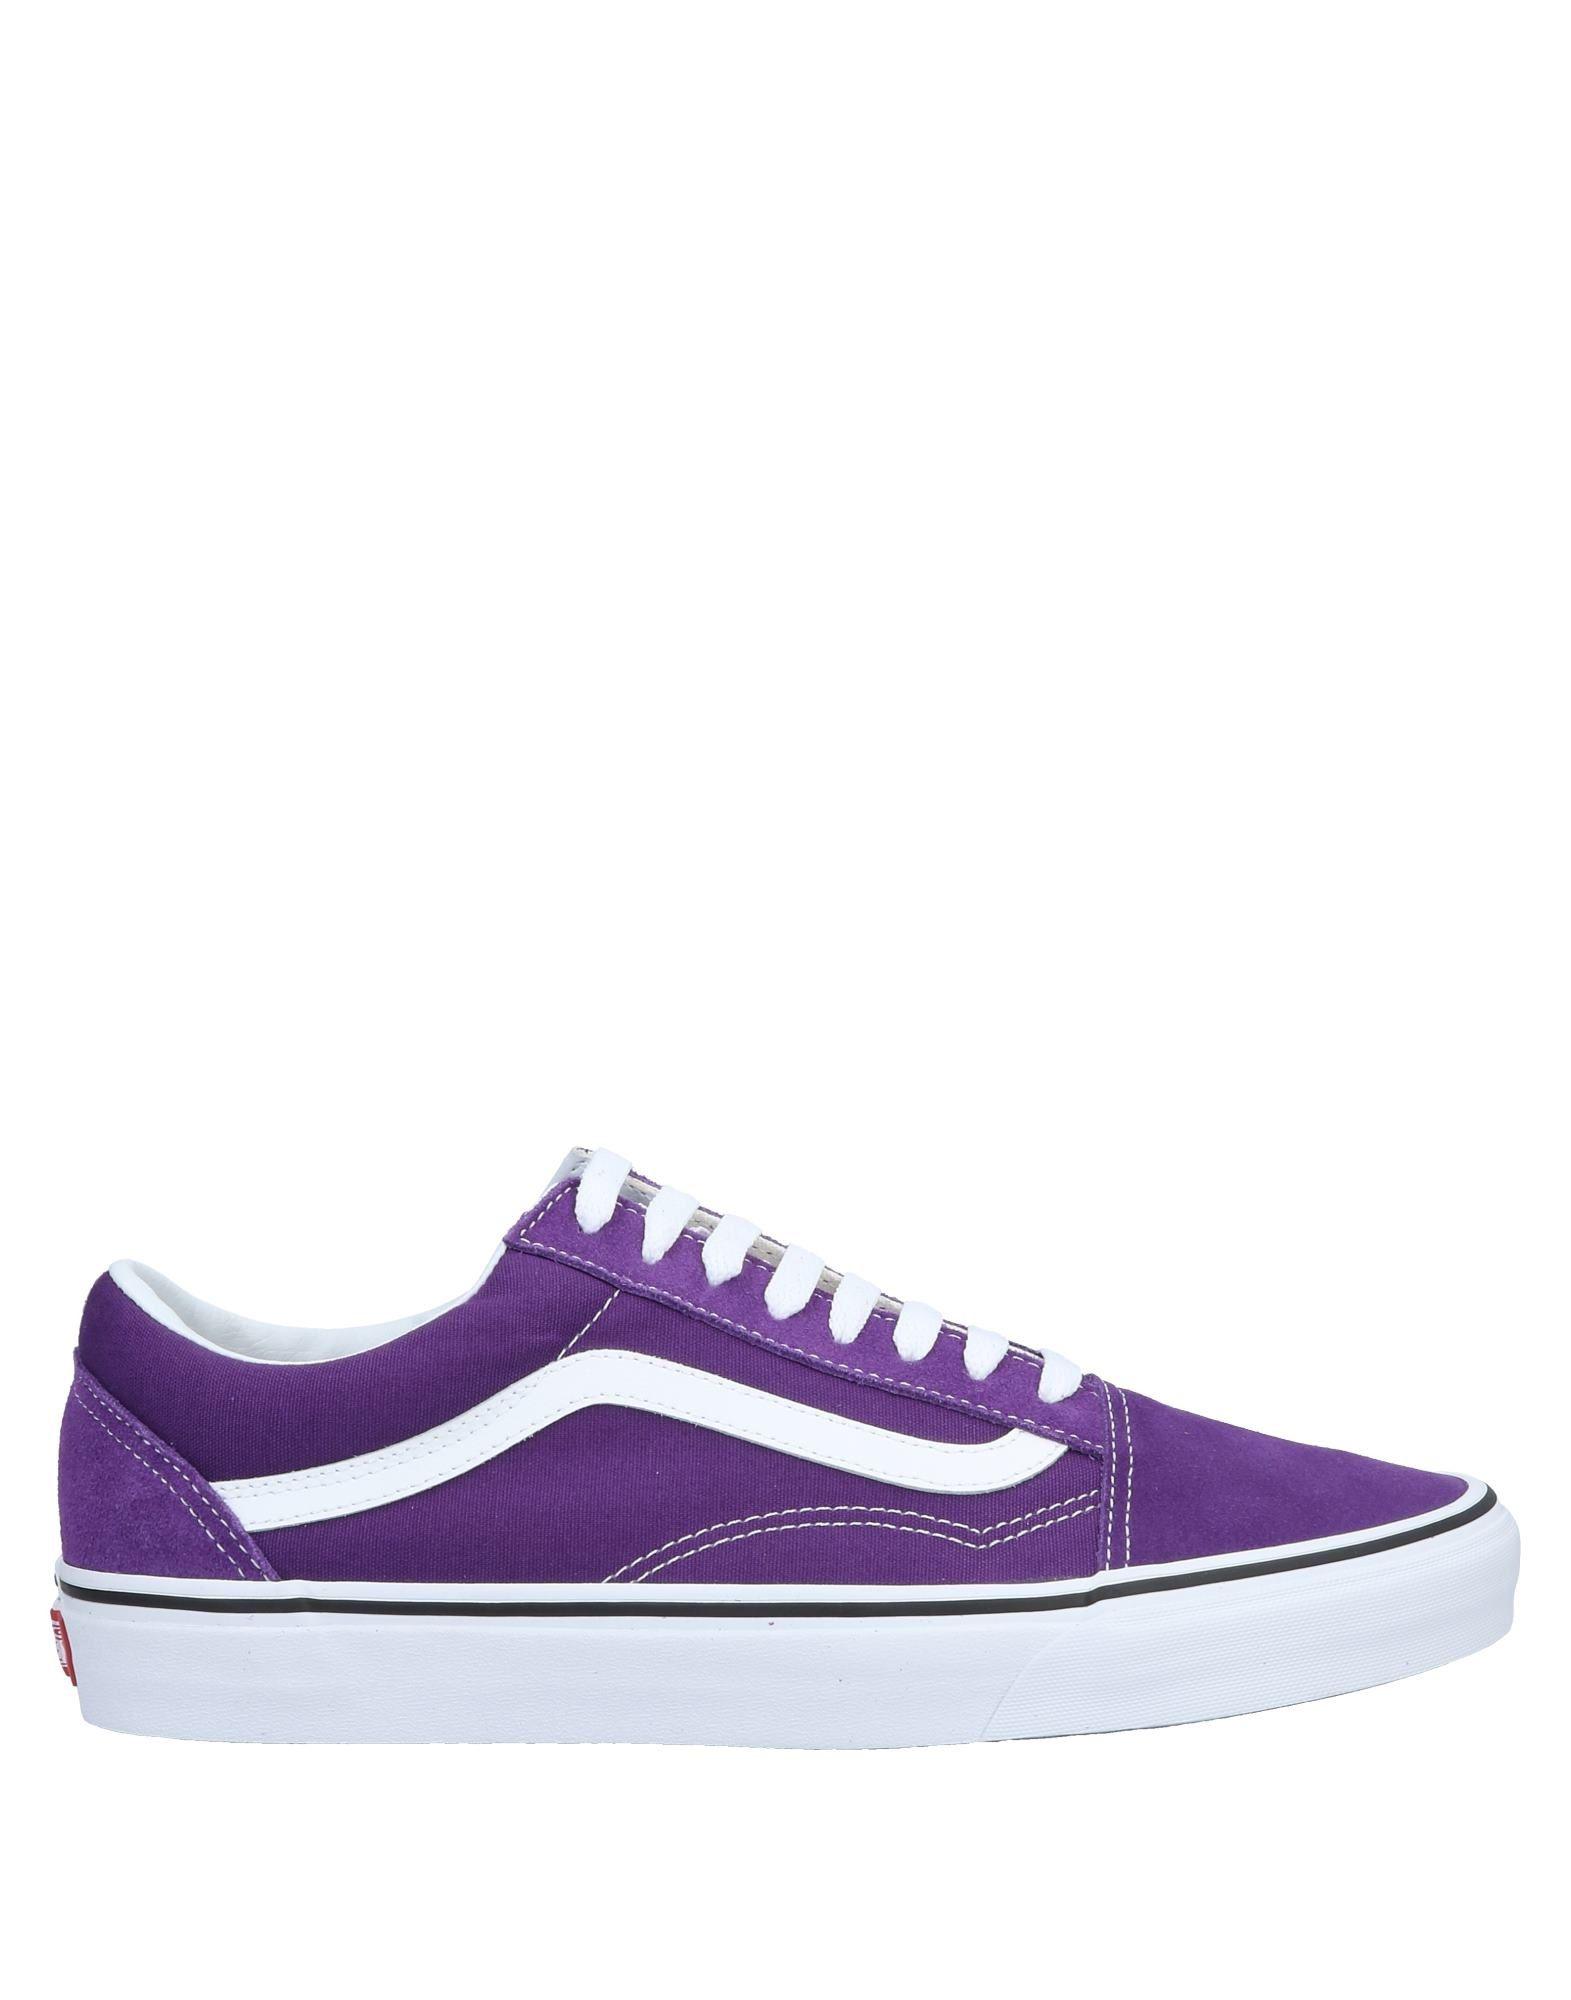 Vans Canvas Violet Old Skool Shoes in 